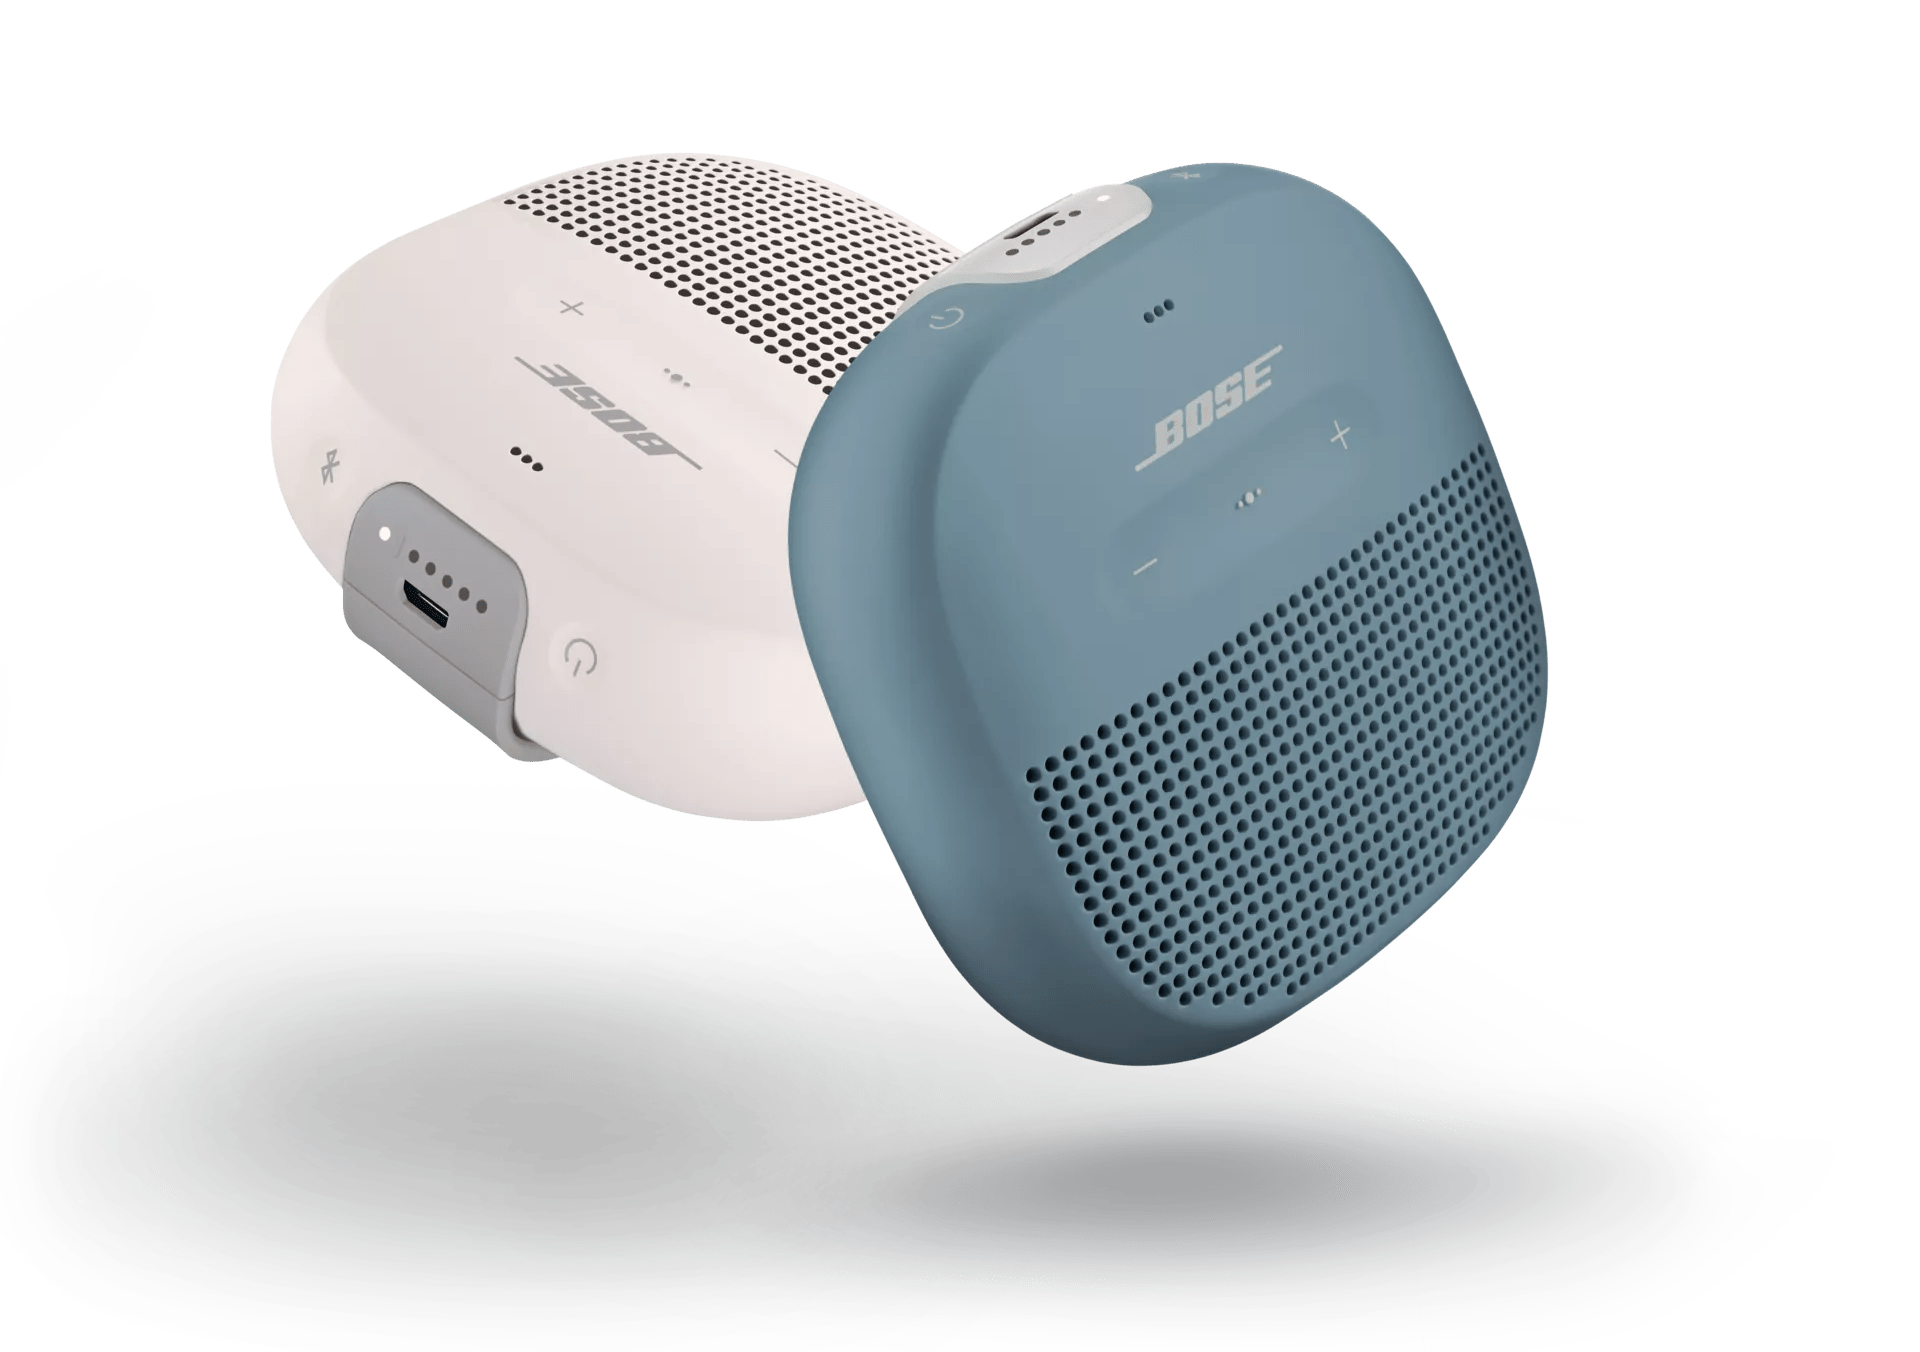 Enceintes Bluetooth SoundLink Micro en bleu pierre et en blanc fumé